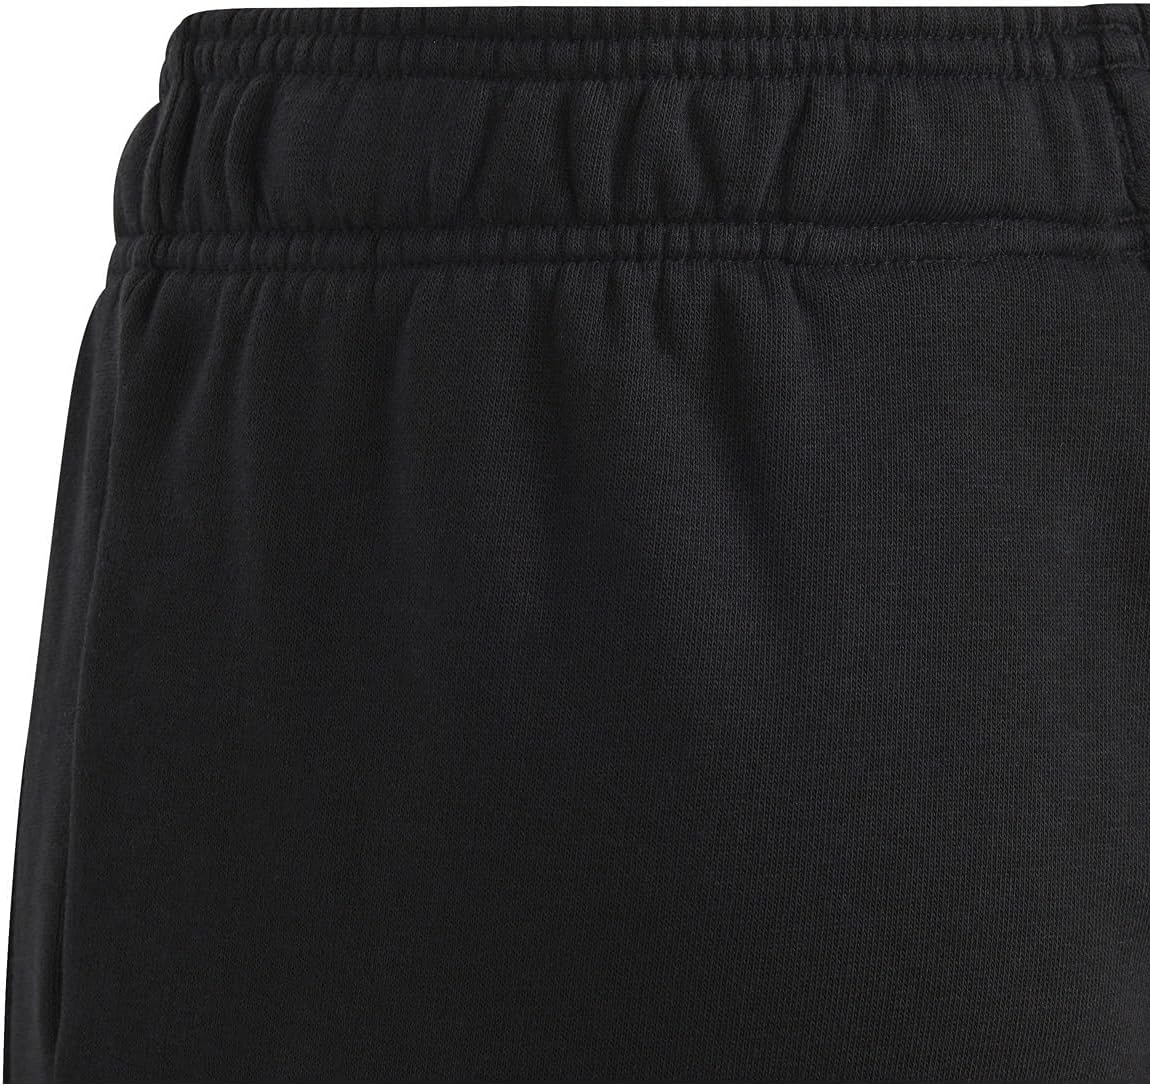 adidas Unisex U BL PANT BLACK/WHITE H47140 NOT SPORTS SPECIFIC PANTS for Unisex Pants